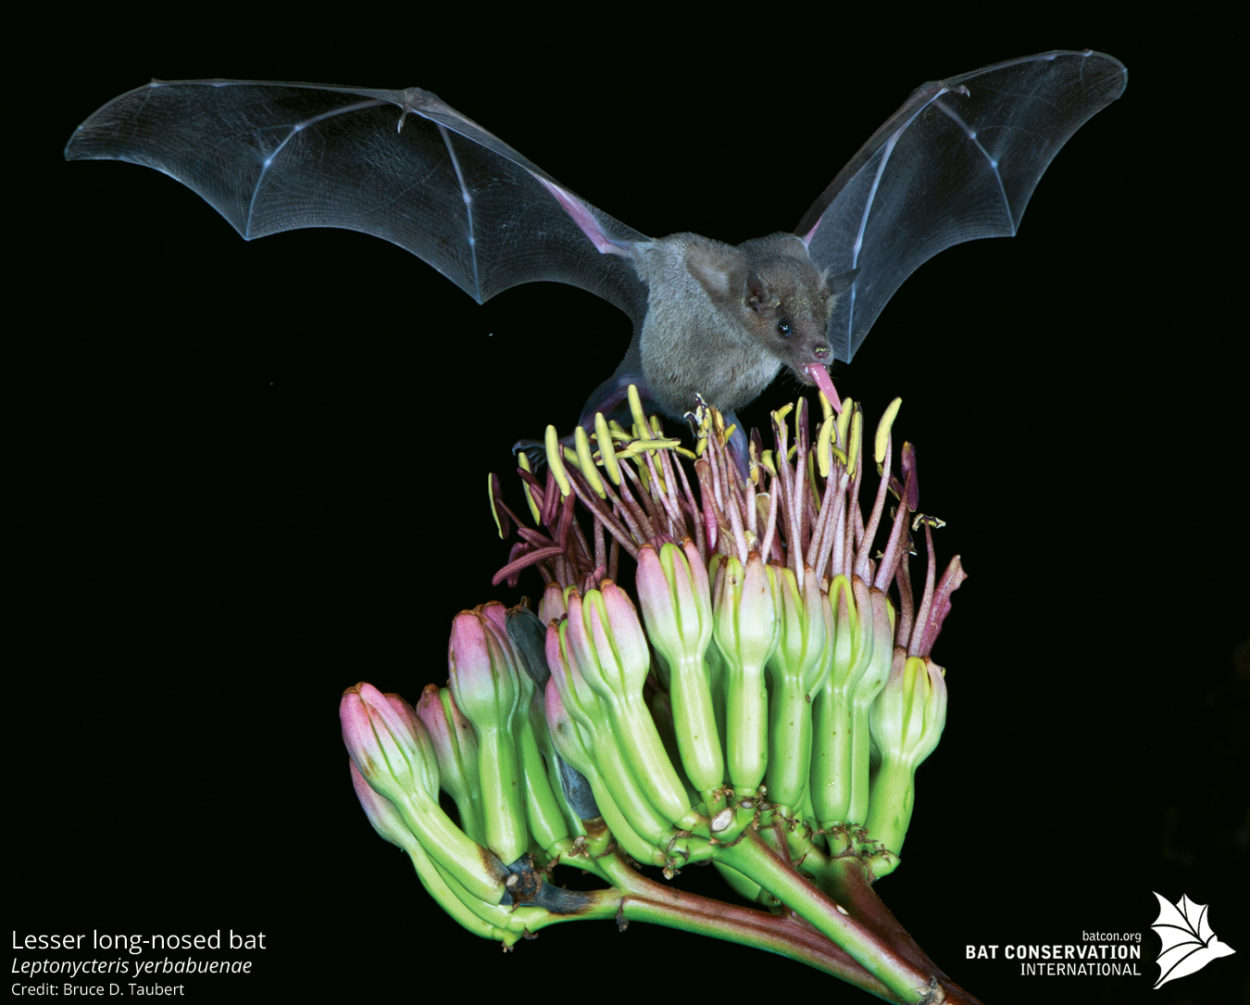 Feds say bat species thriving, no longer needs ESA protection